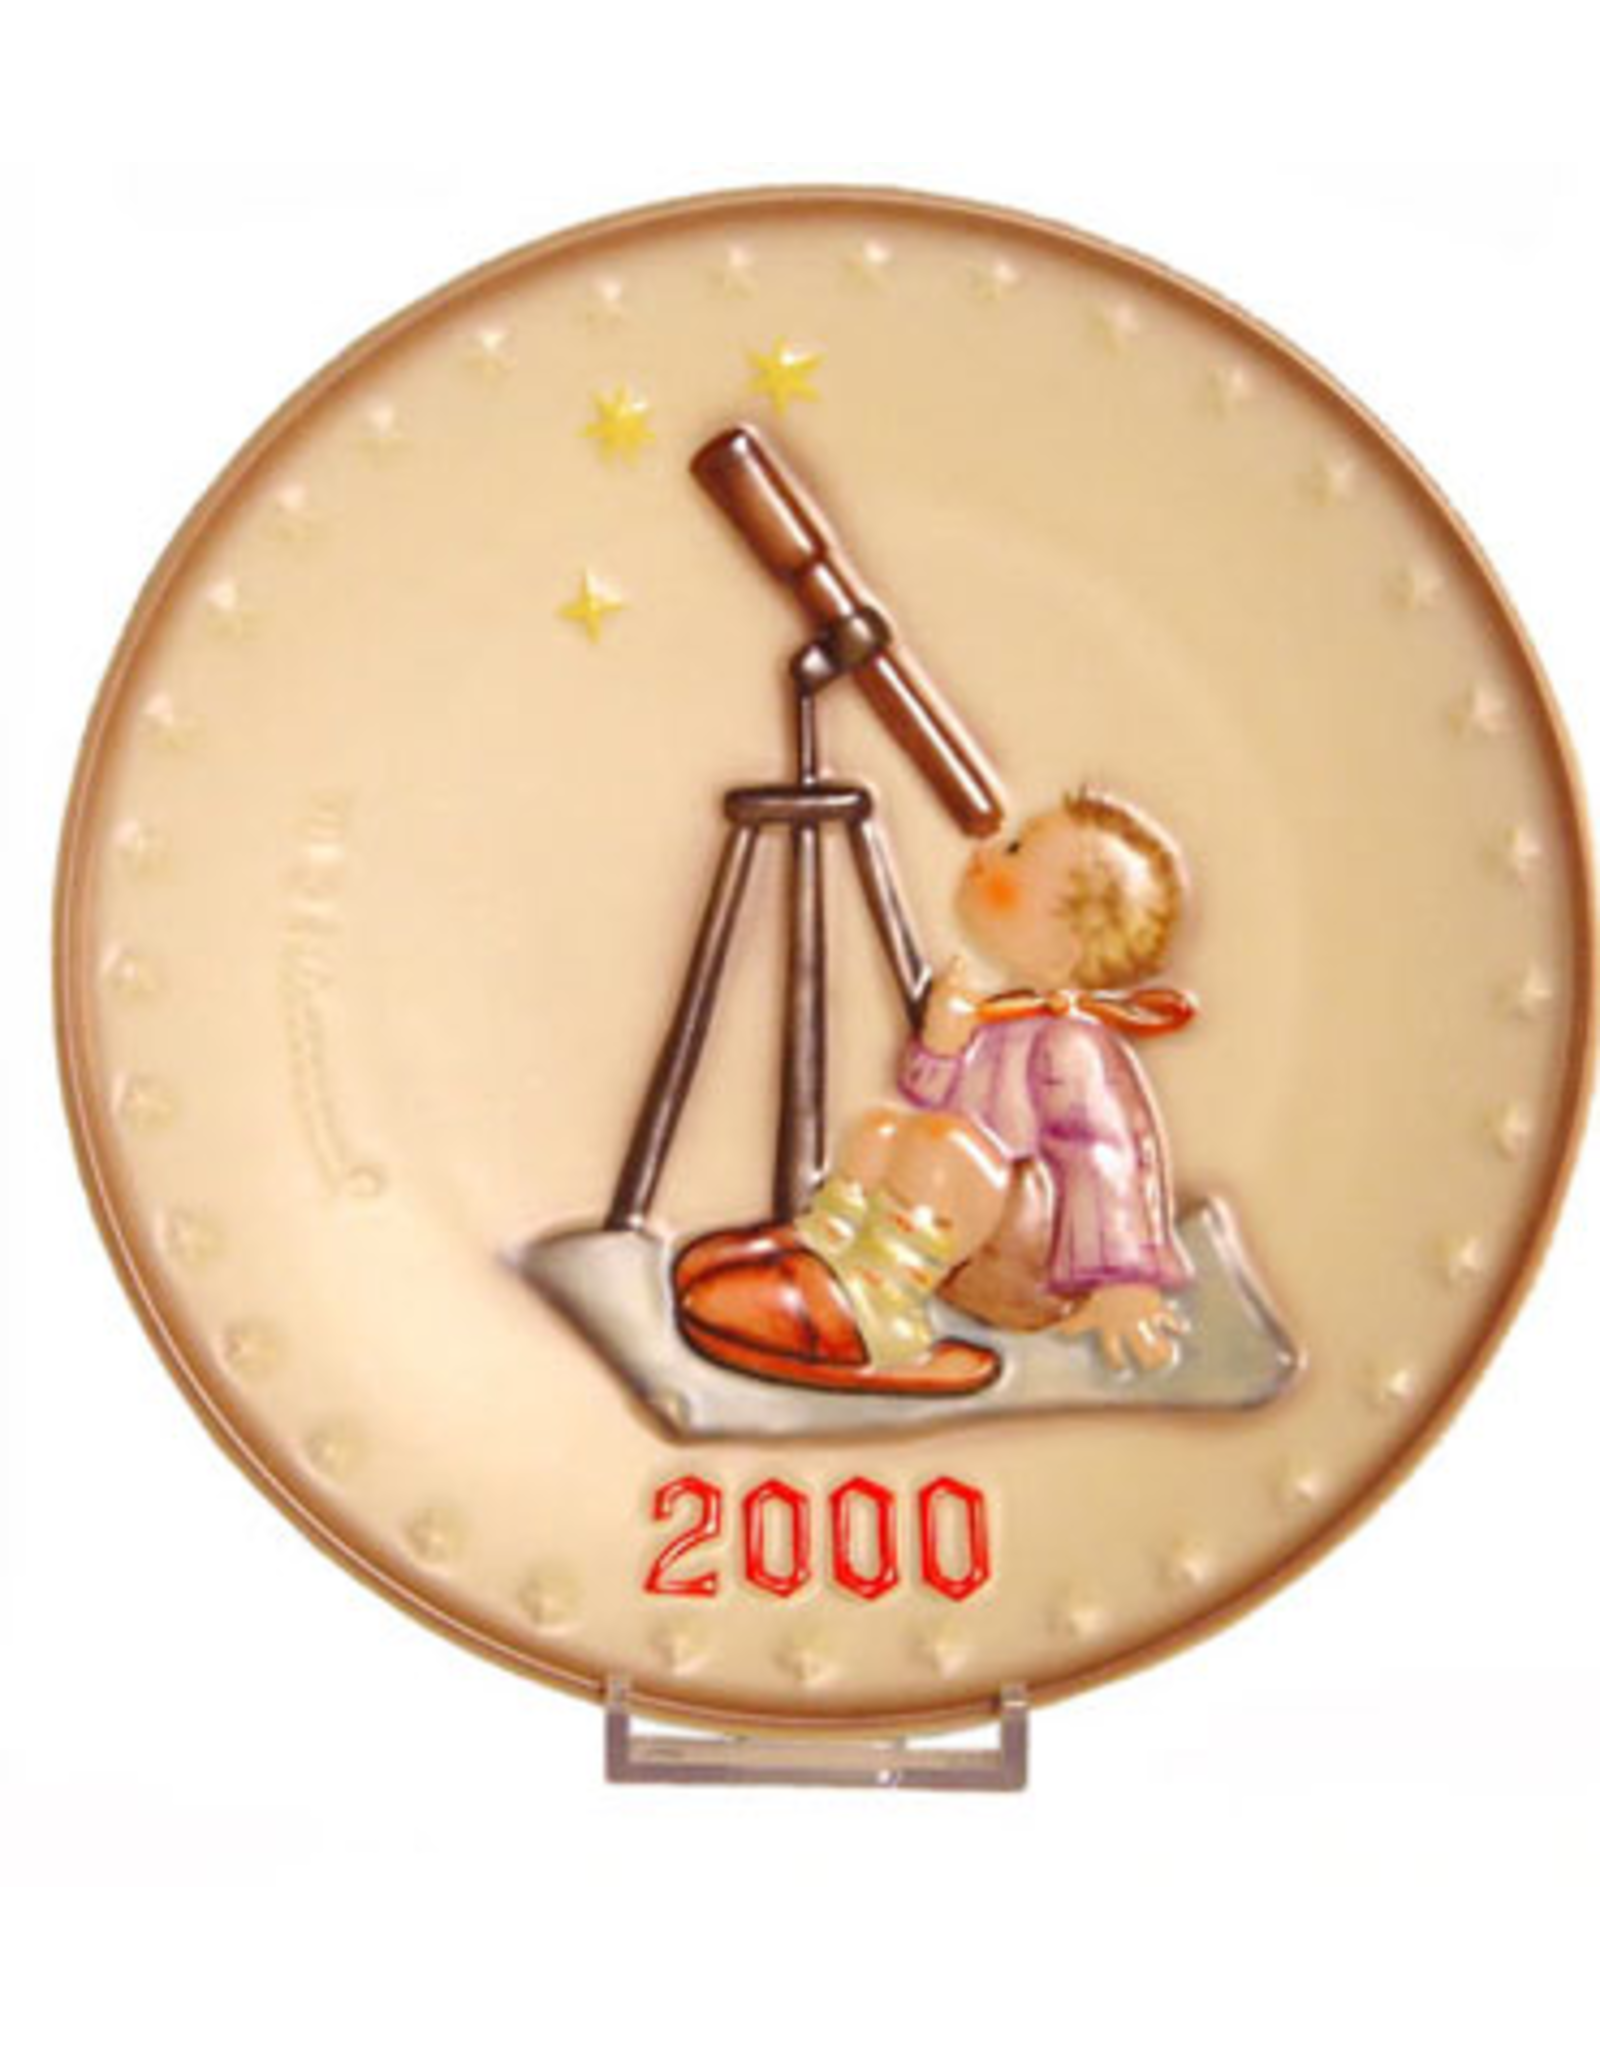 Star Gazer 2000 Millennium Plate 151563 M I Hummel